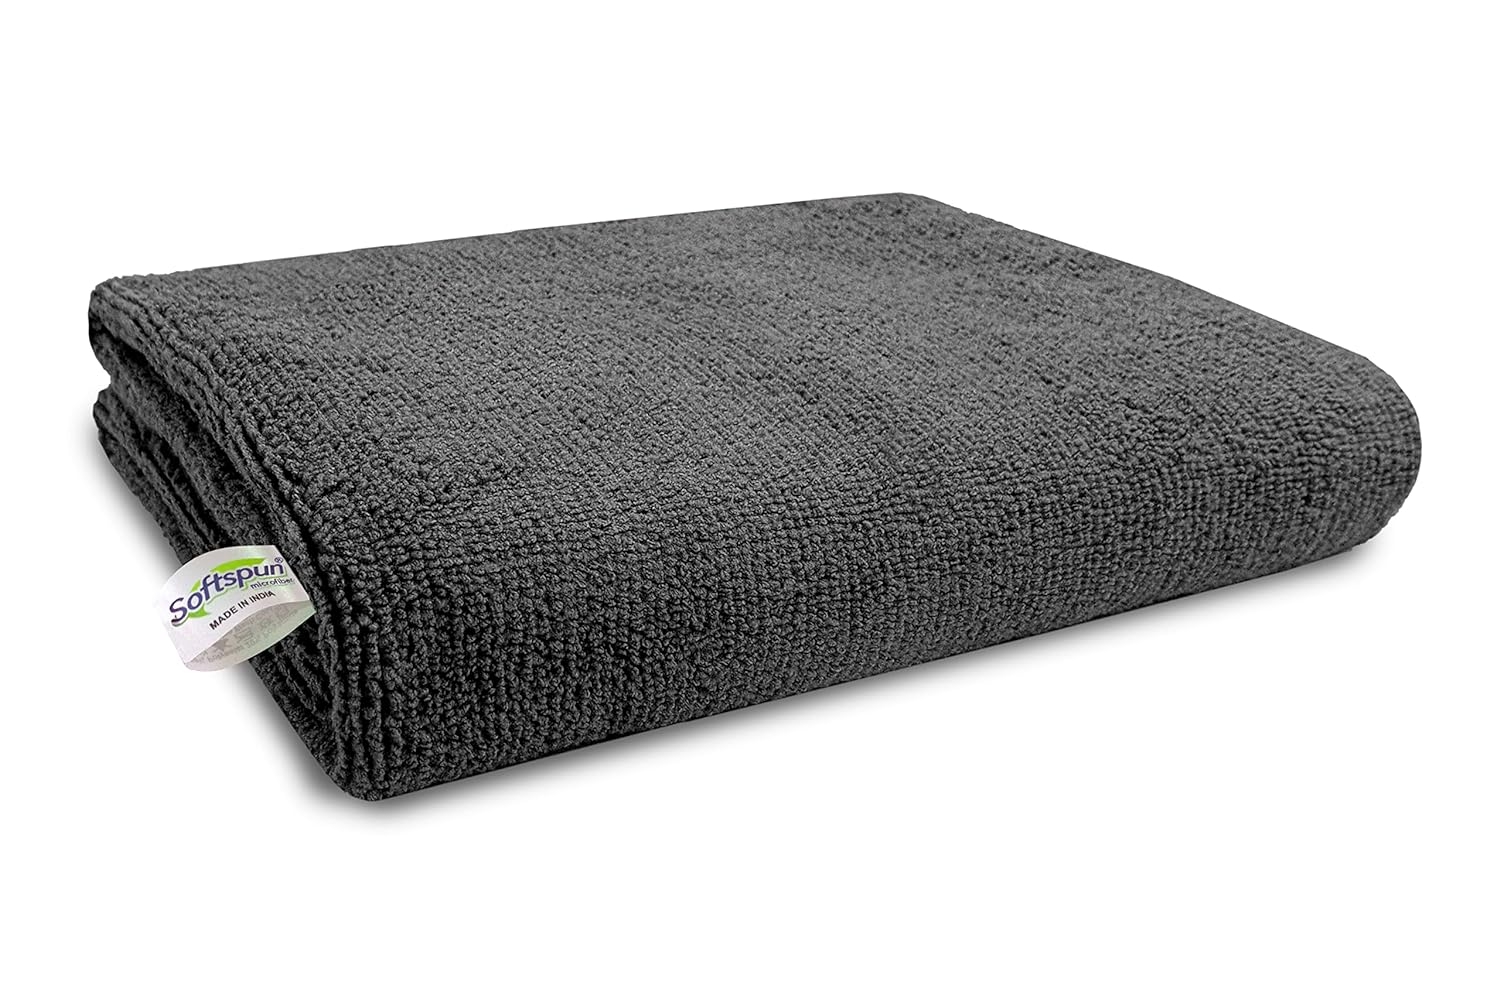 SOFTSPUN Microfiber Bath Towel (60x120cm - 340 GSM) | Unisex Ultra Absorbent Super Soft | Quick Drying